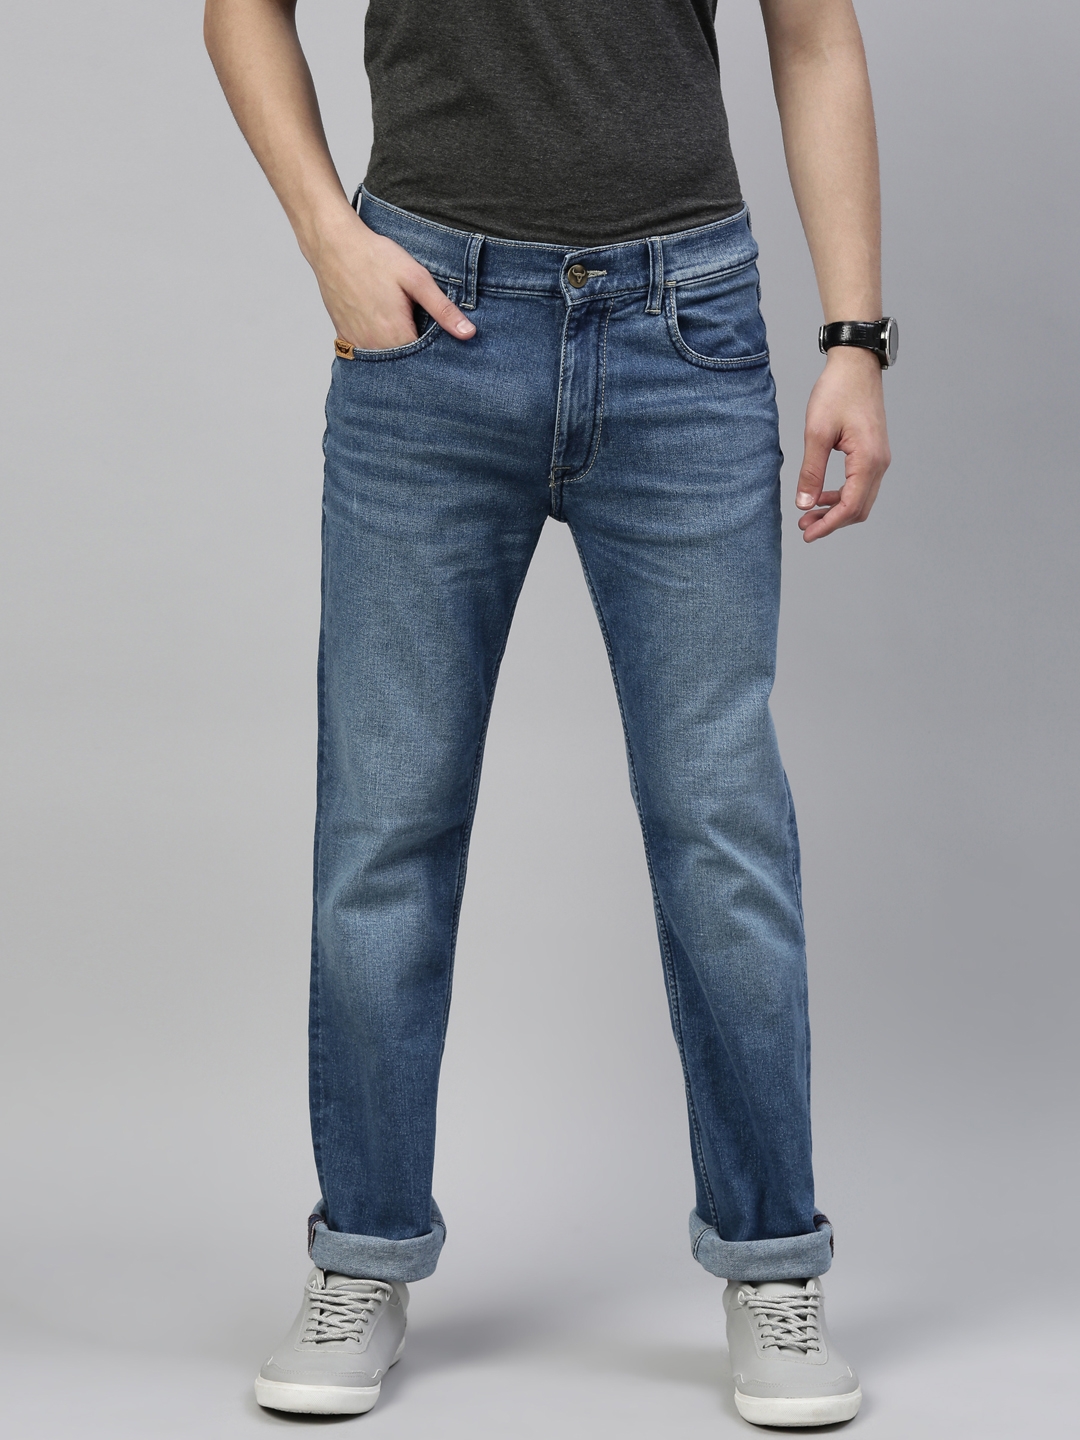 American Bull | American Bull Mens LT.Blue Denim Jeans 0